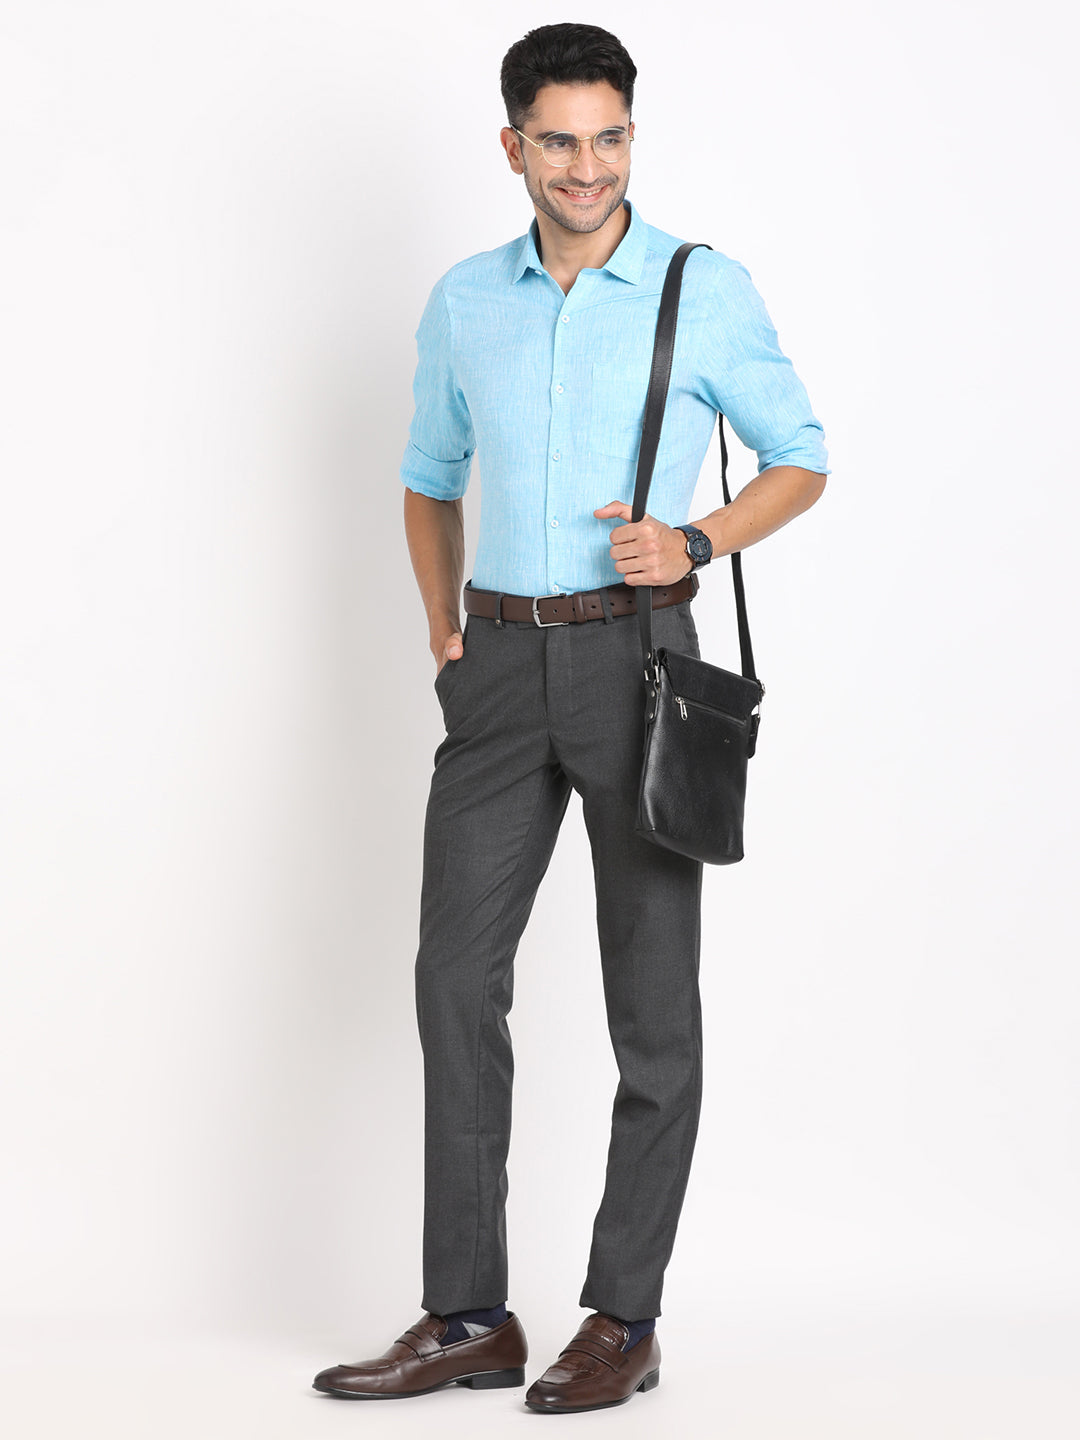 Pure Linen Turquoise Plain Slim Fit Full Sleeve Formal Shirt